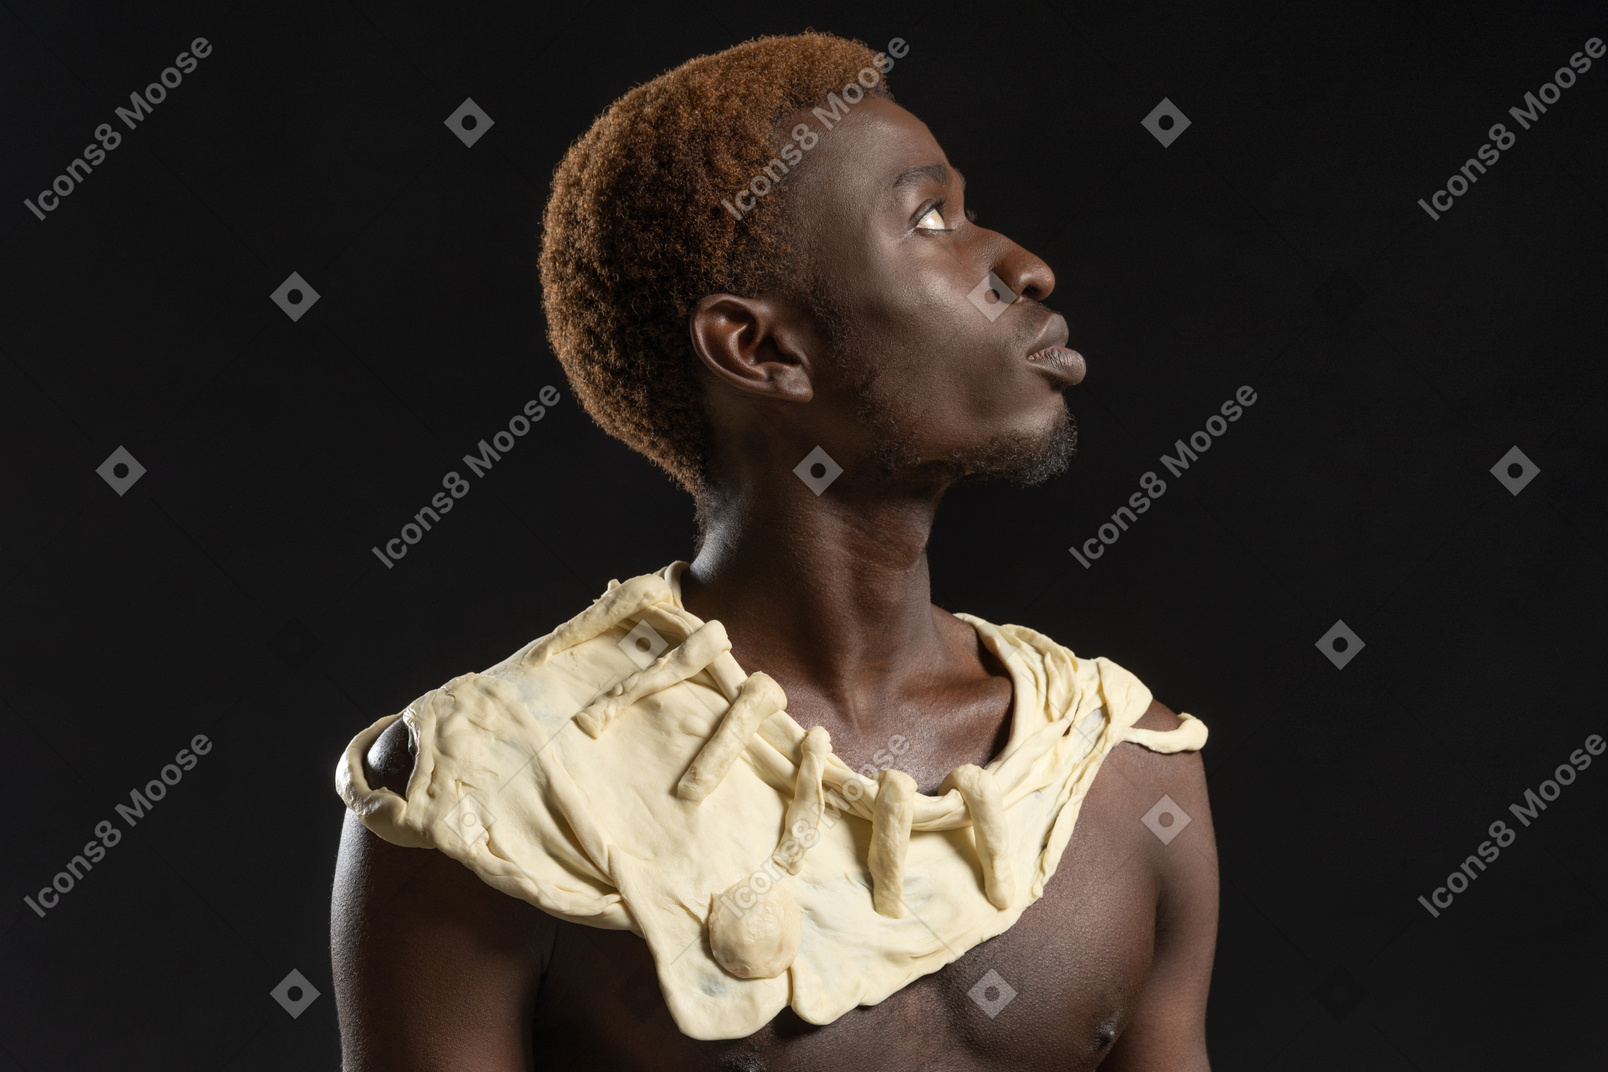 Сбоку портрет африканца на темном фоне с воротником из теста